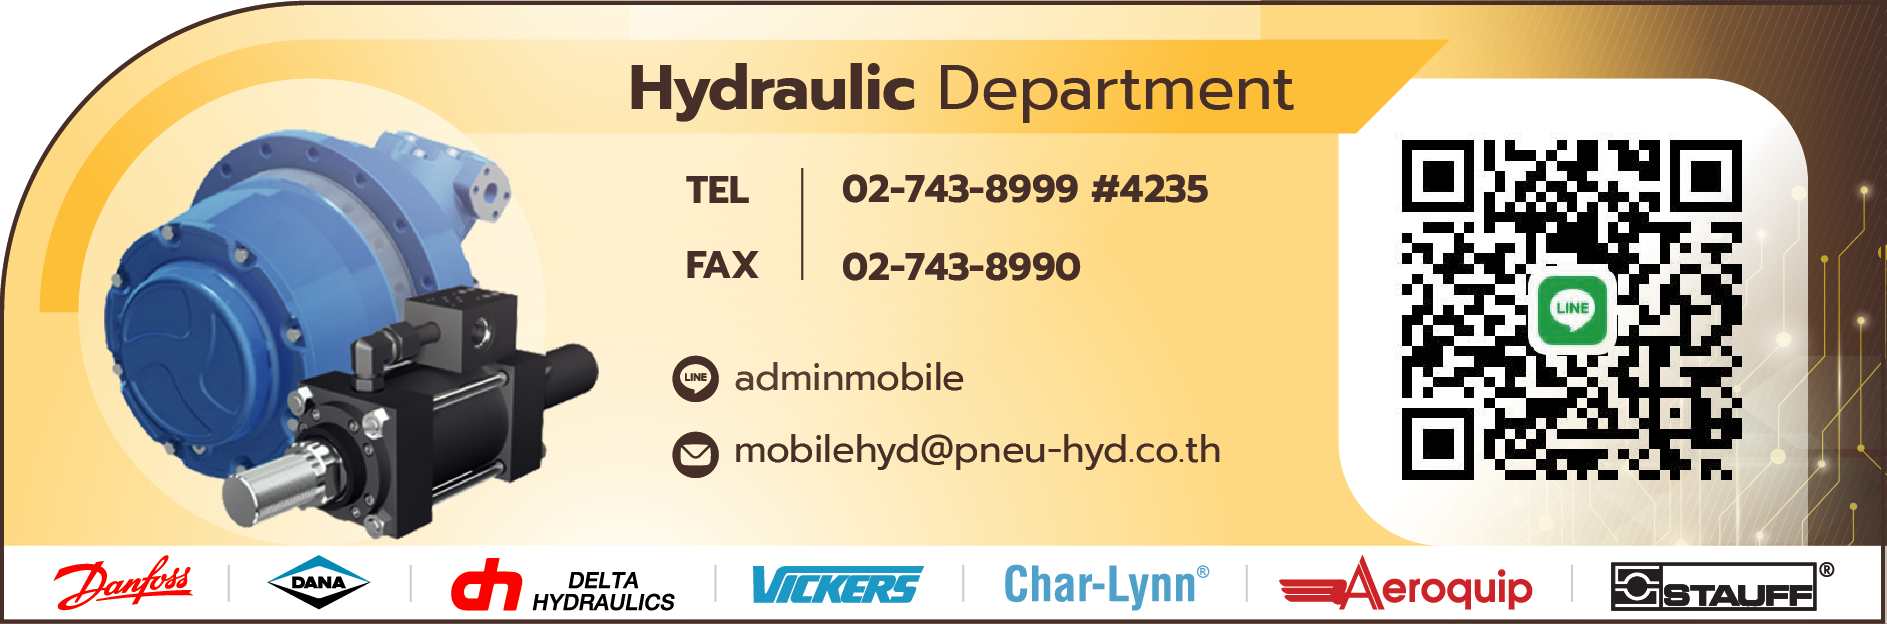 Hydraulic Department 1